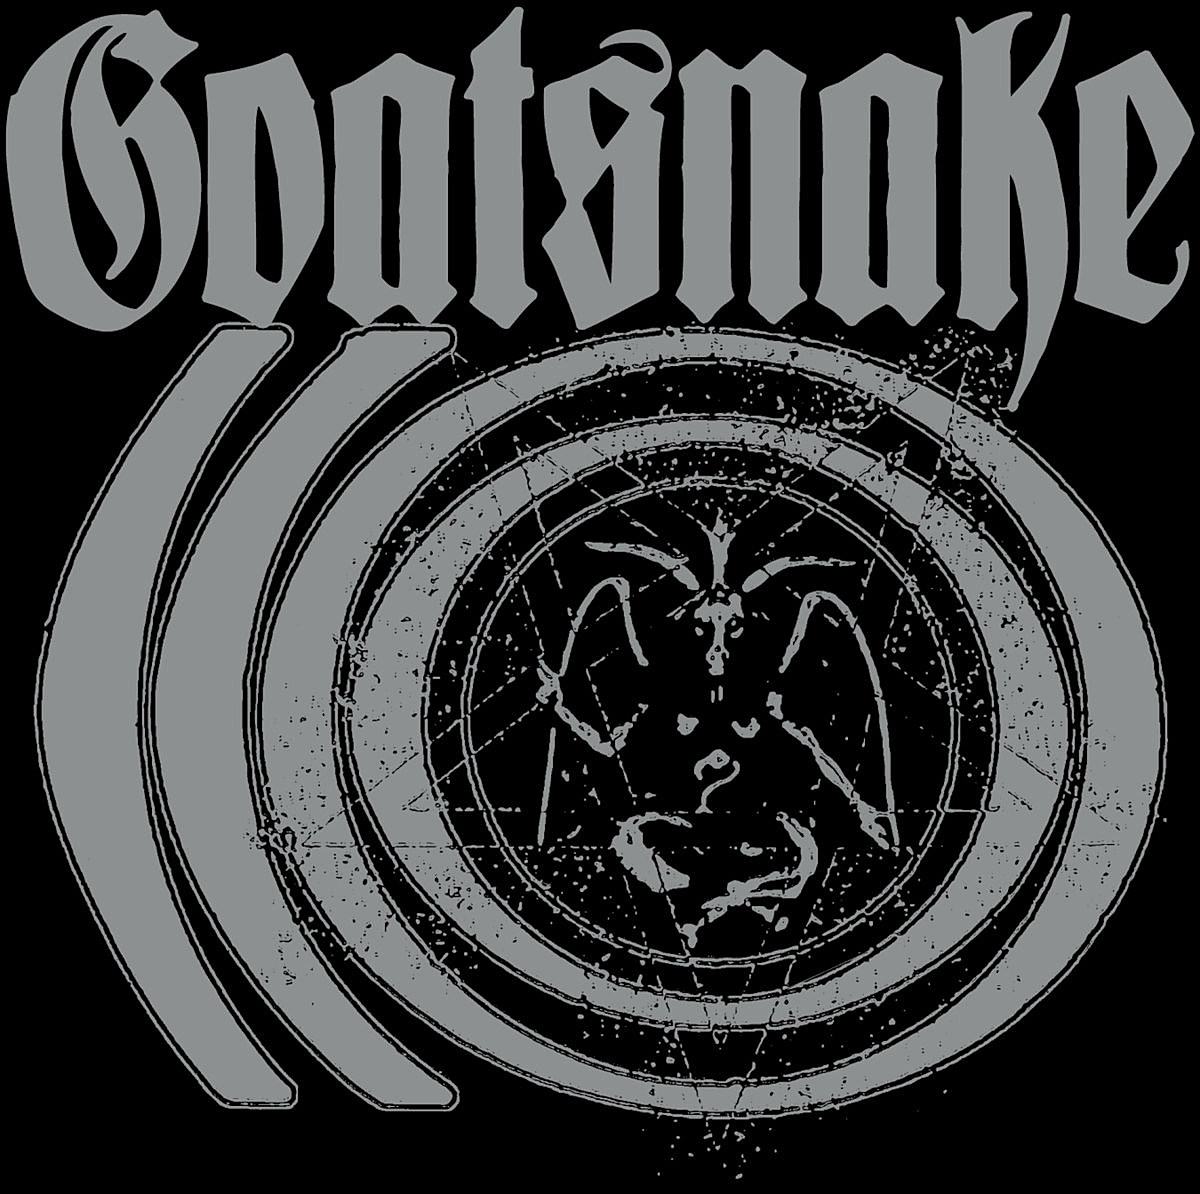 Goatsnake I